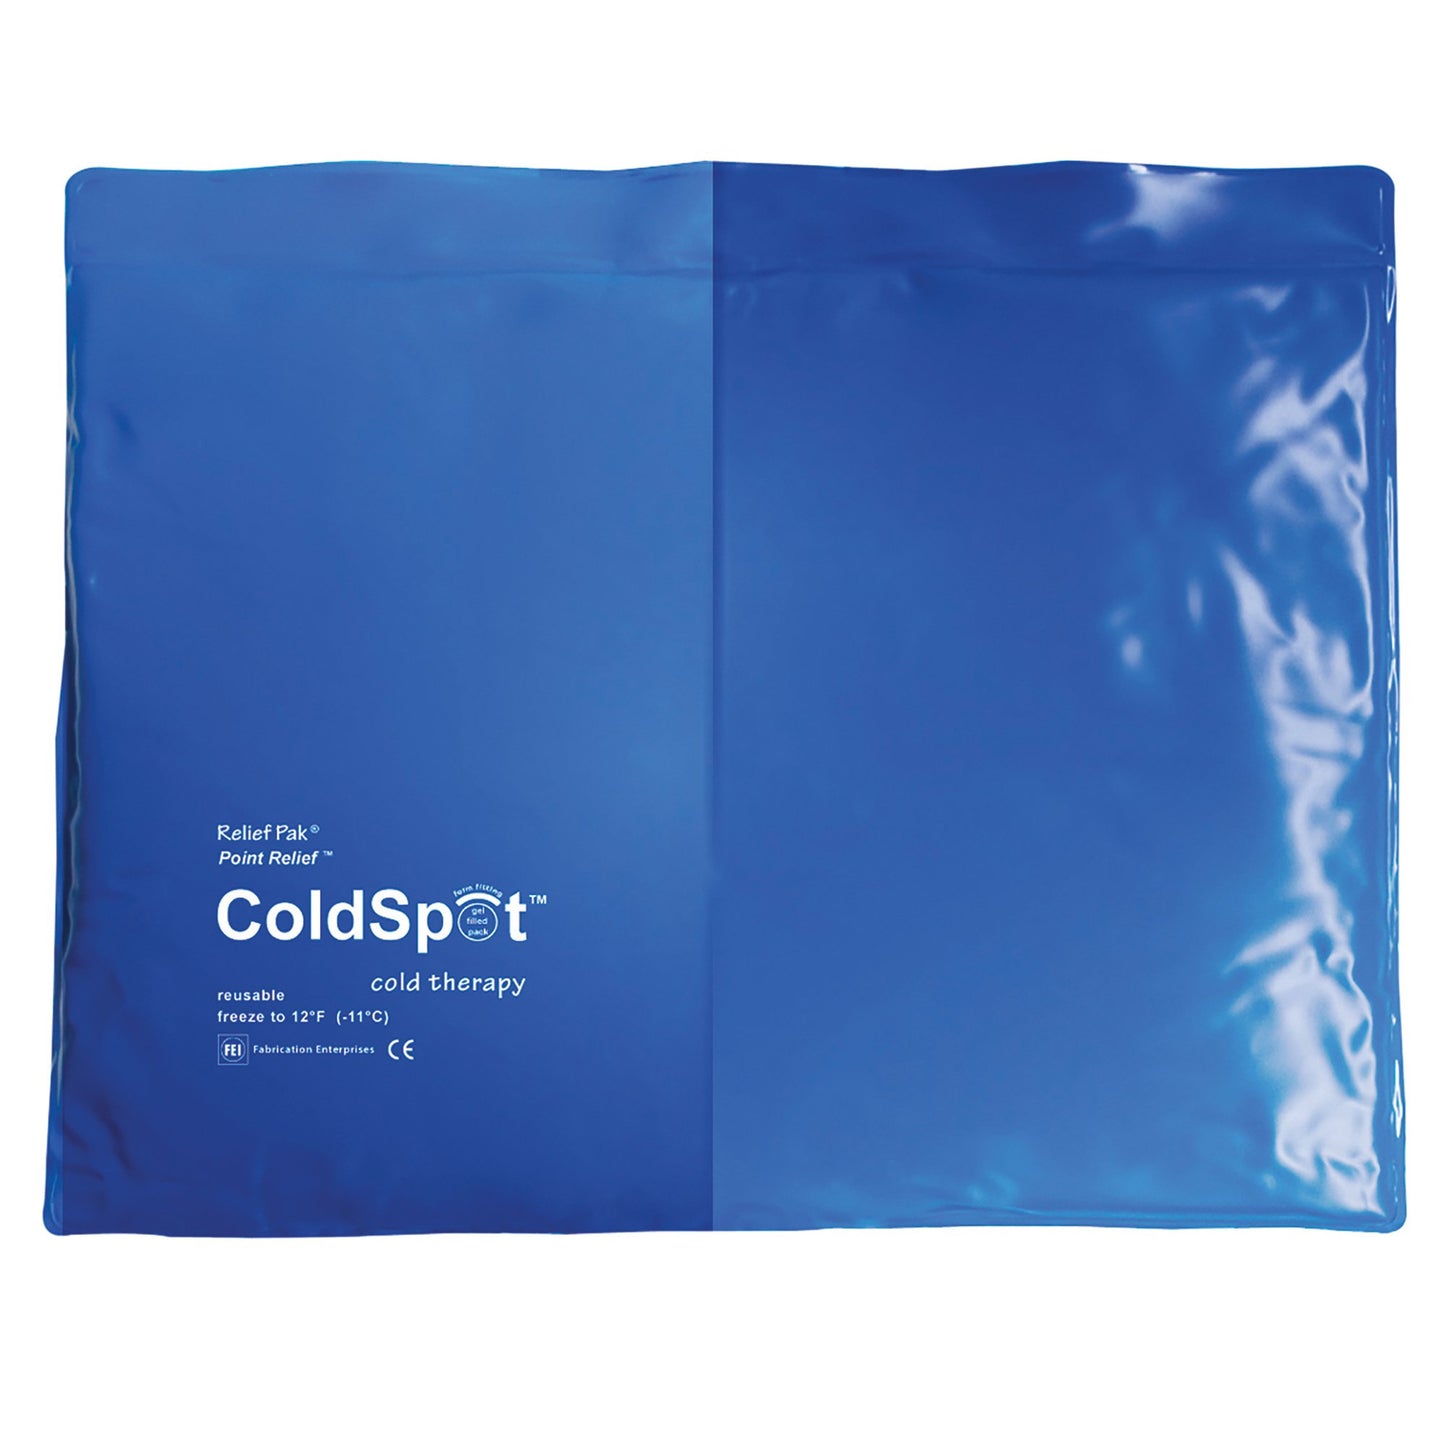 Relief Pak® ColdSpot™ Blue Vinyl Pack, 11 x 14 Inch